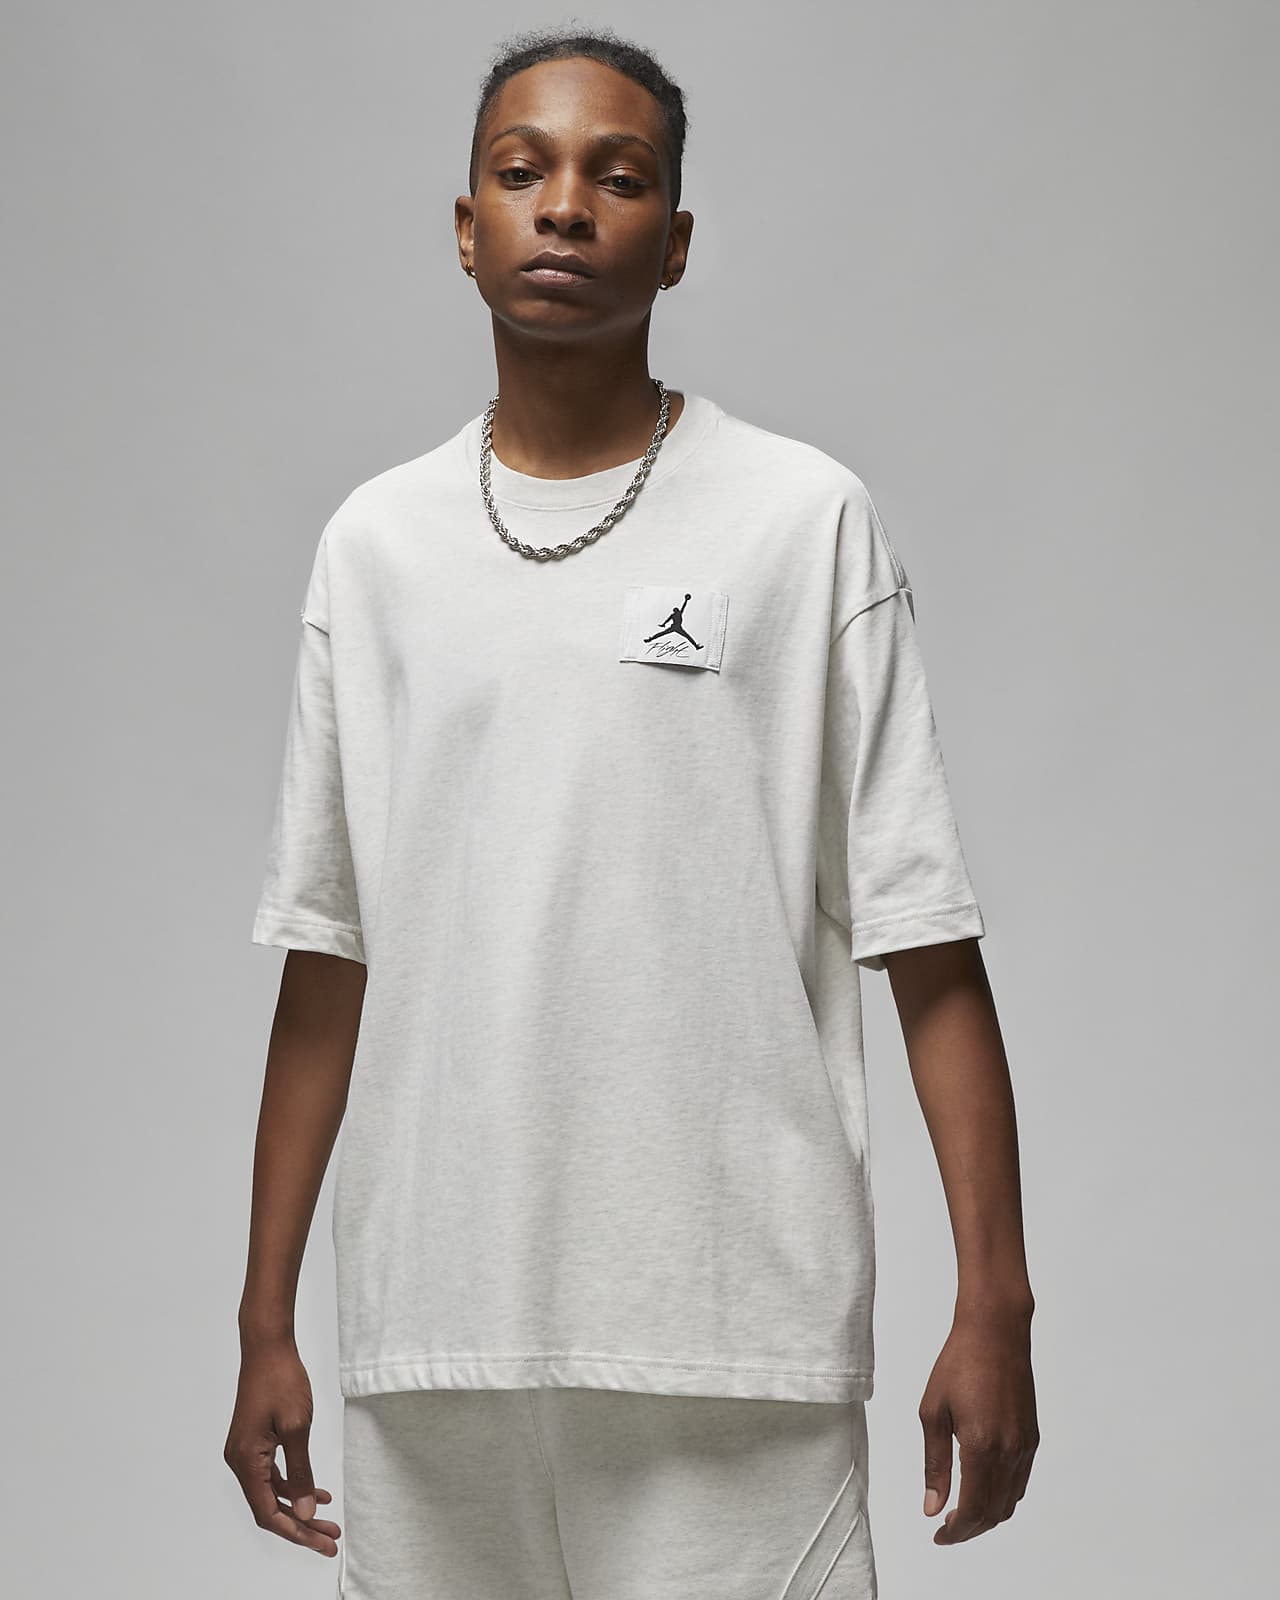 Jordan x Off White T-Shirt Review (Off White Logo/Wings Logo) 